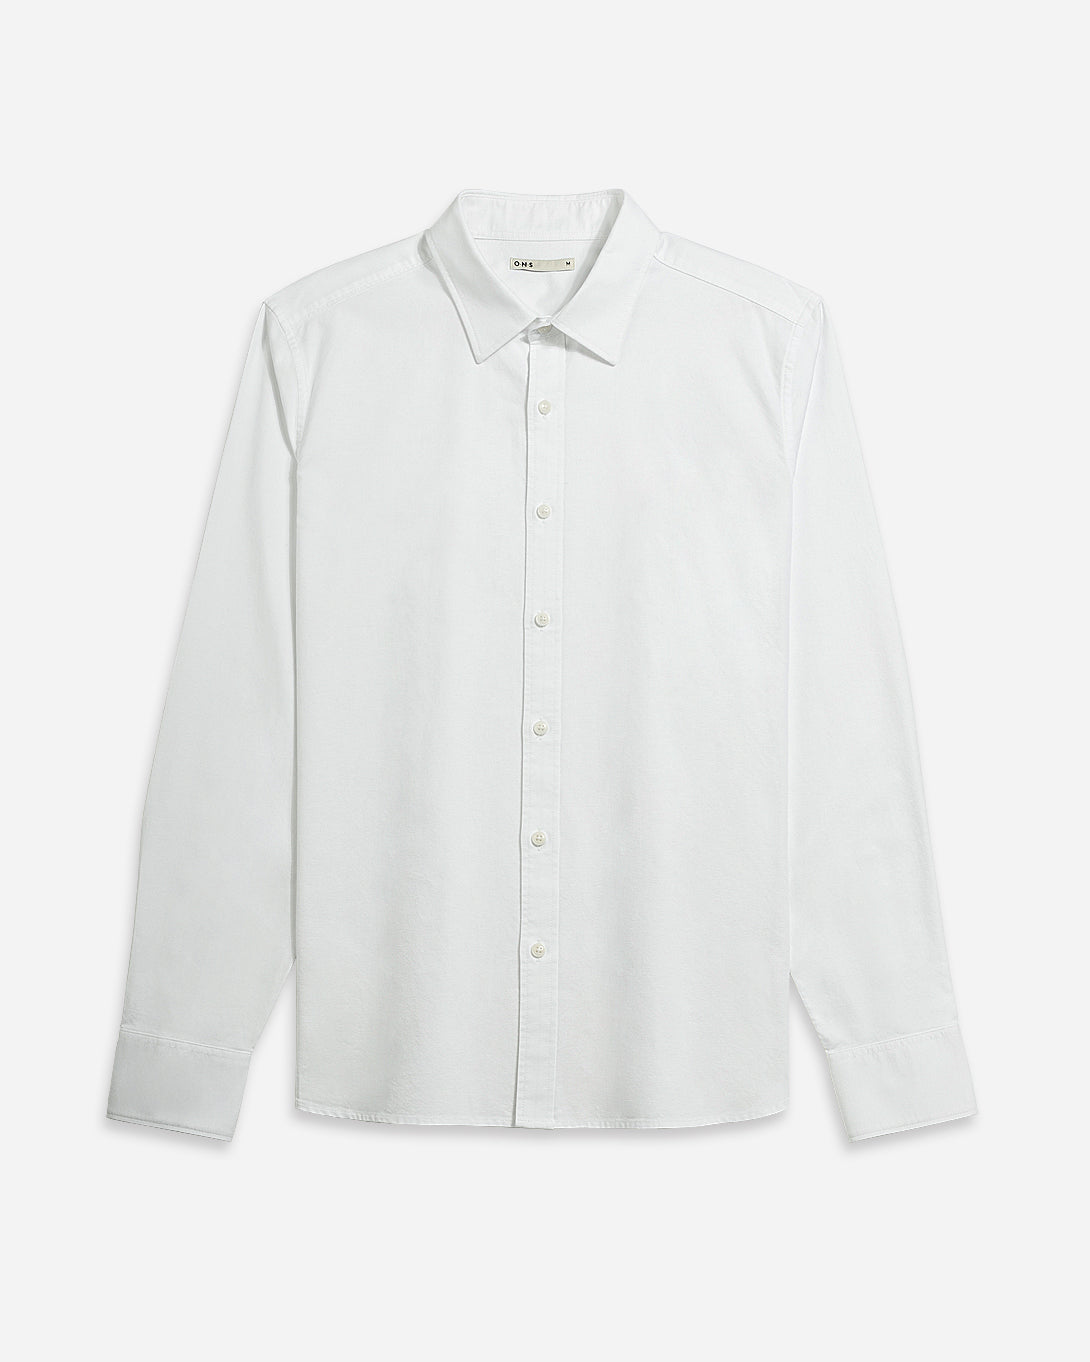 Bright White Arik Oxford Shirt Mens Point Collar Button Up